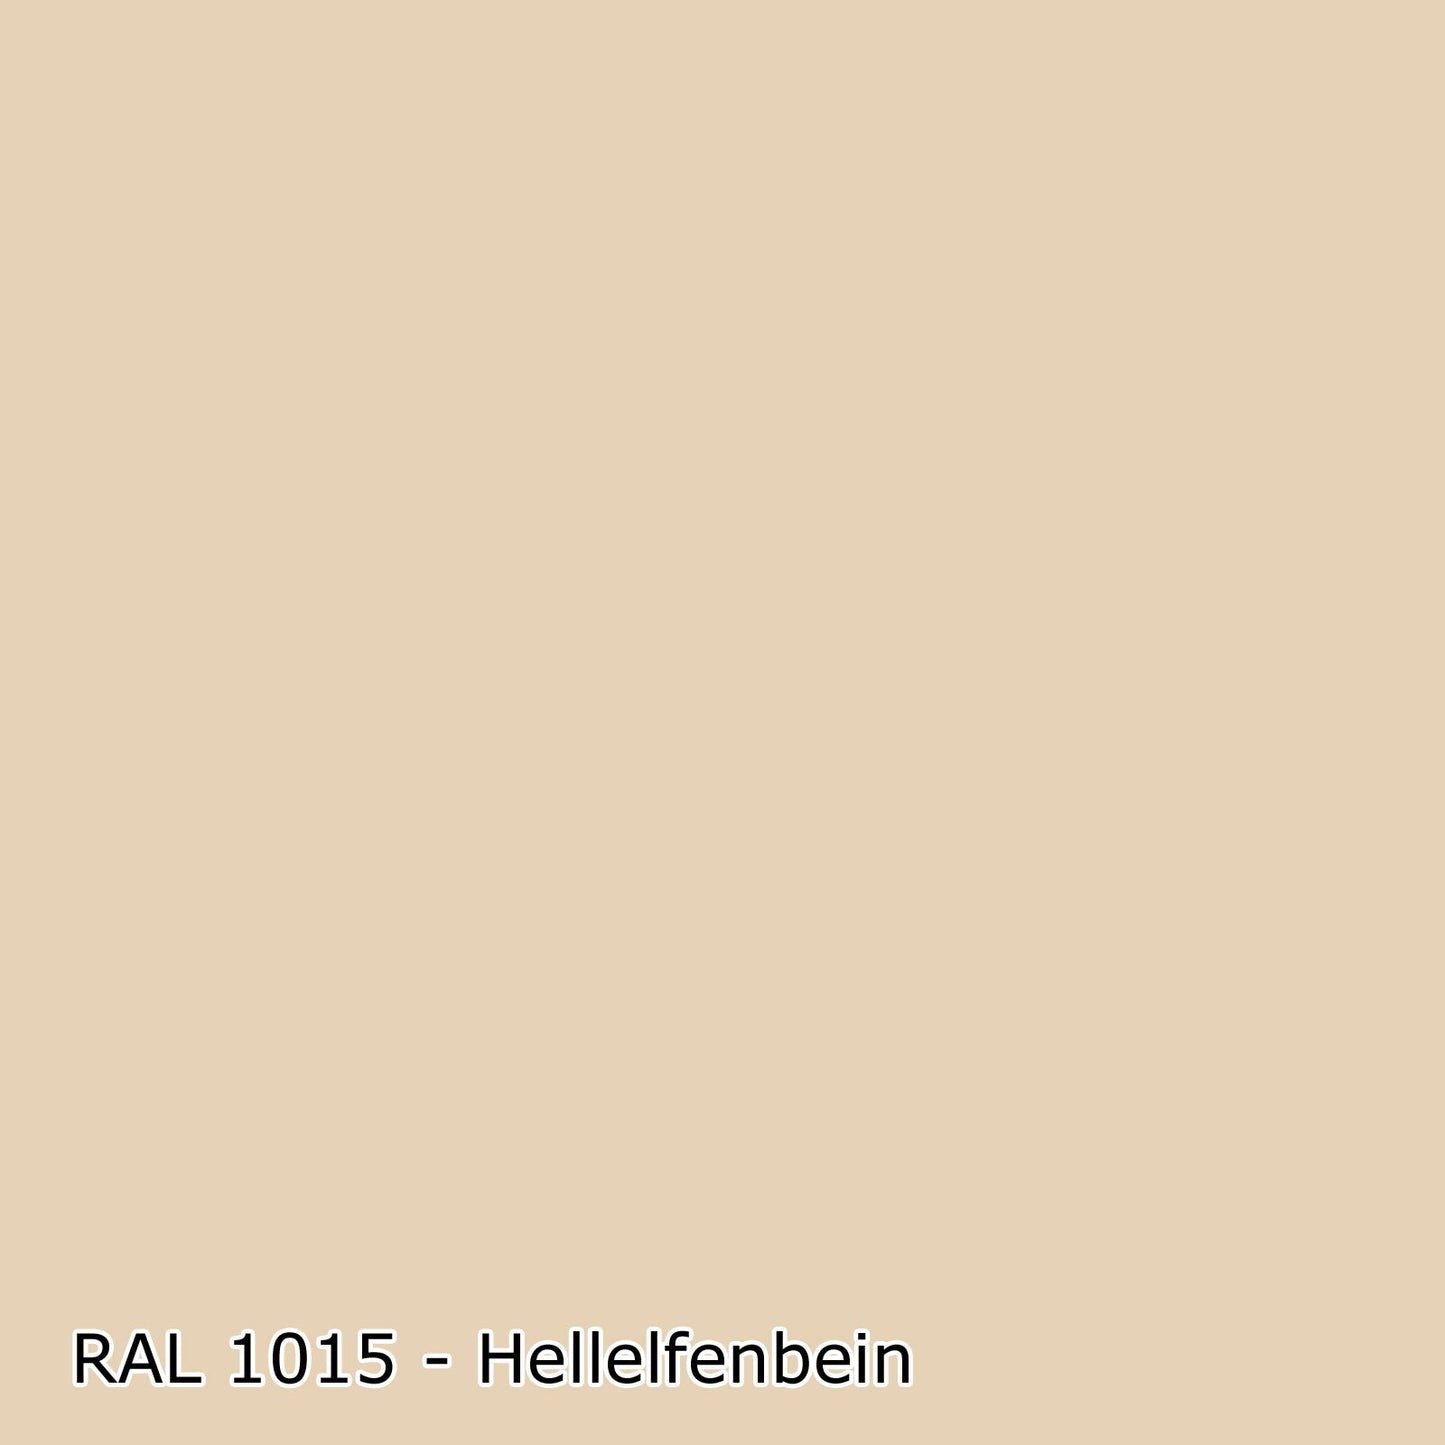 5 L Wetterschutzfarbe, Holzfarbe, Holzlack, RAL Farbwahl - SEIDENMATT (RAL 1000 - 6007)